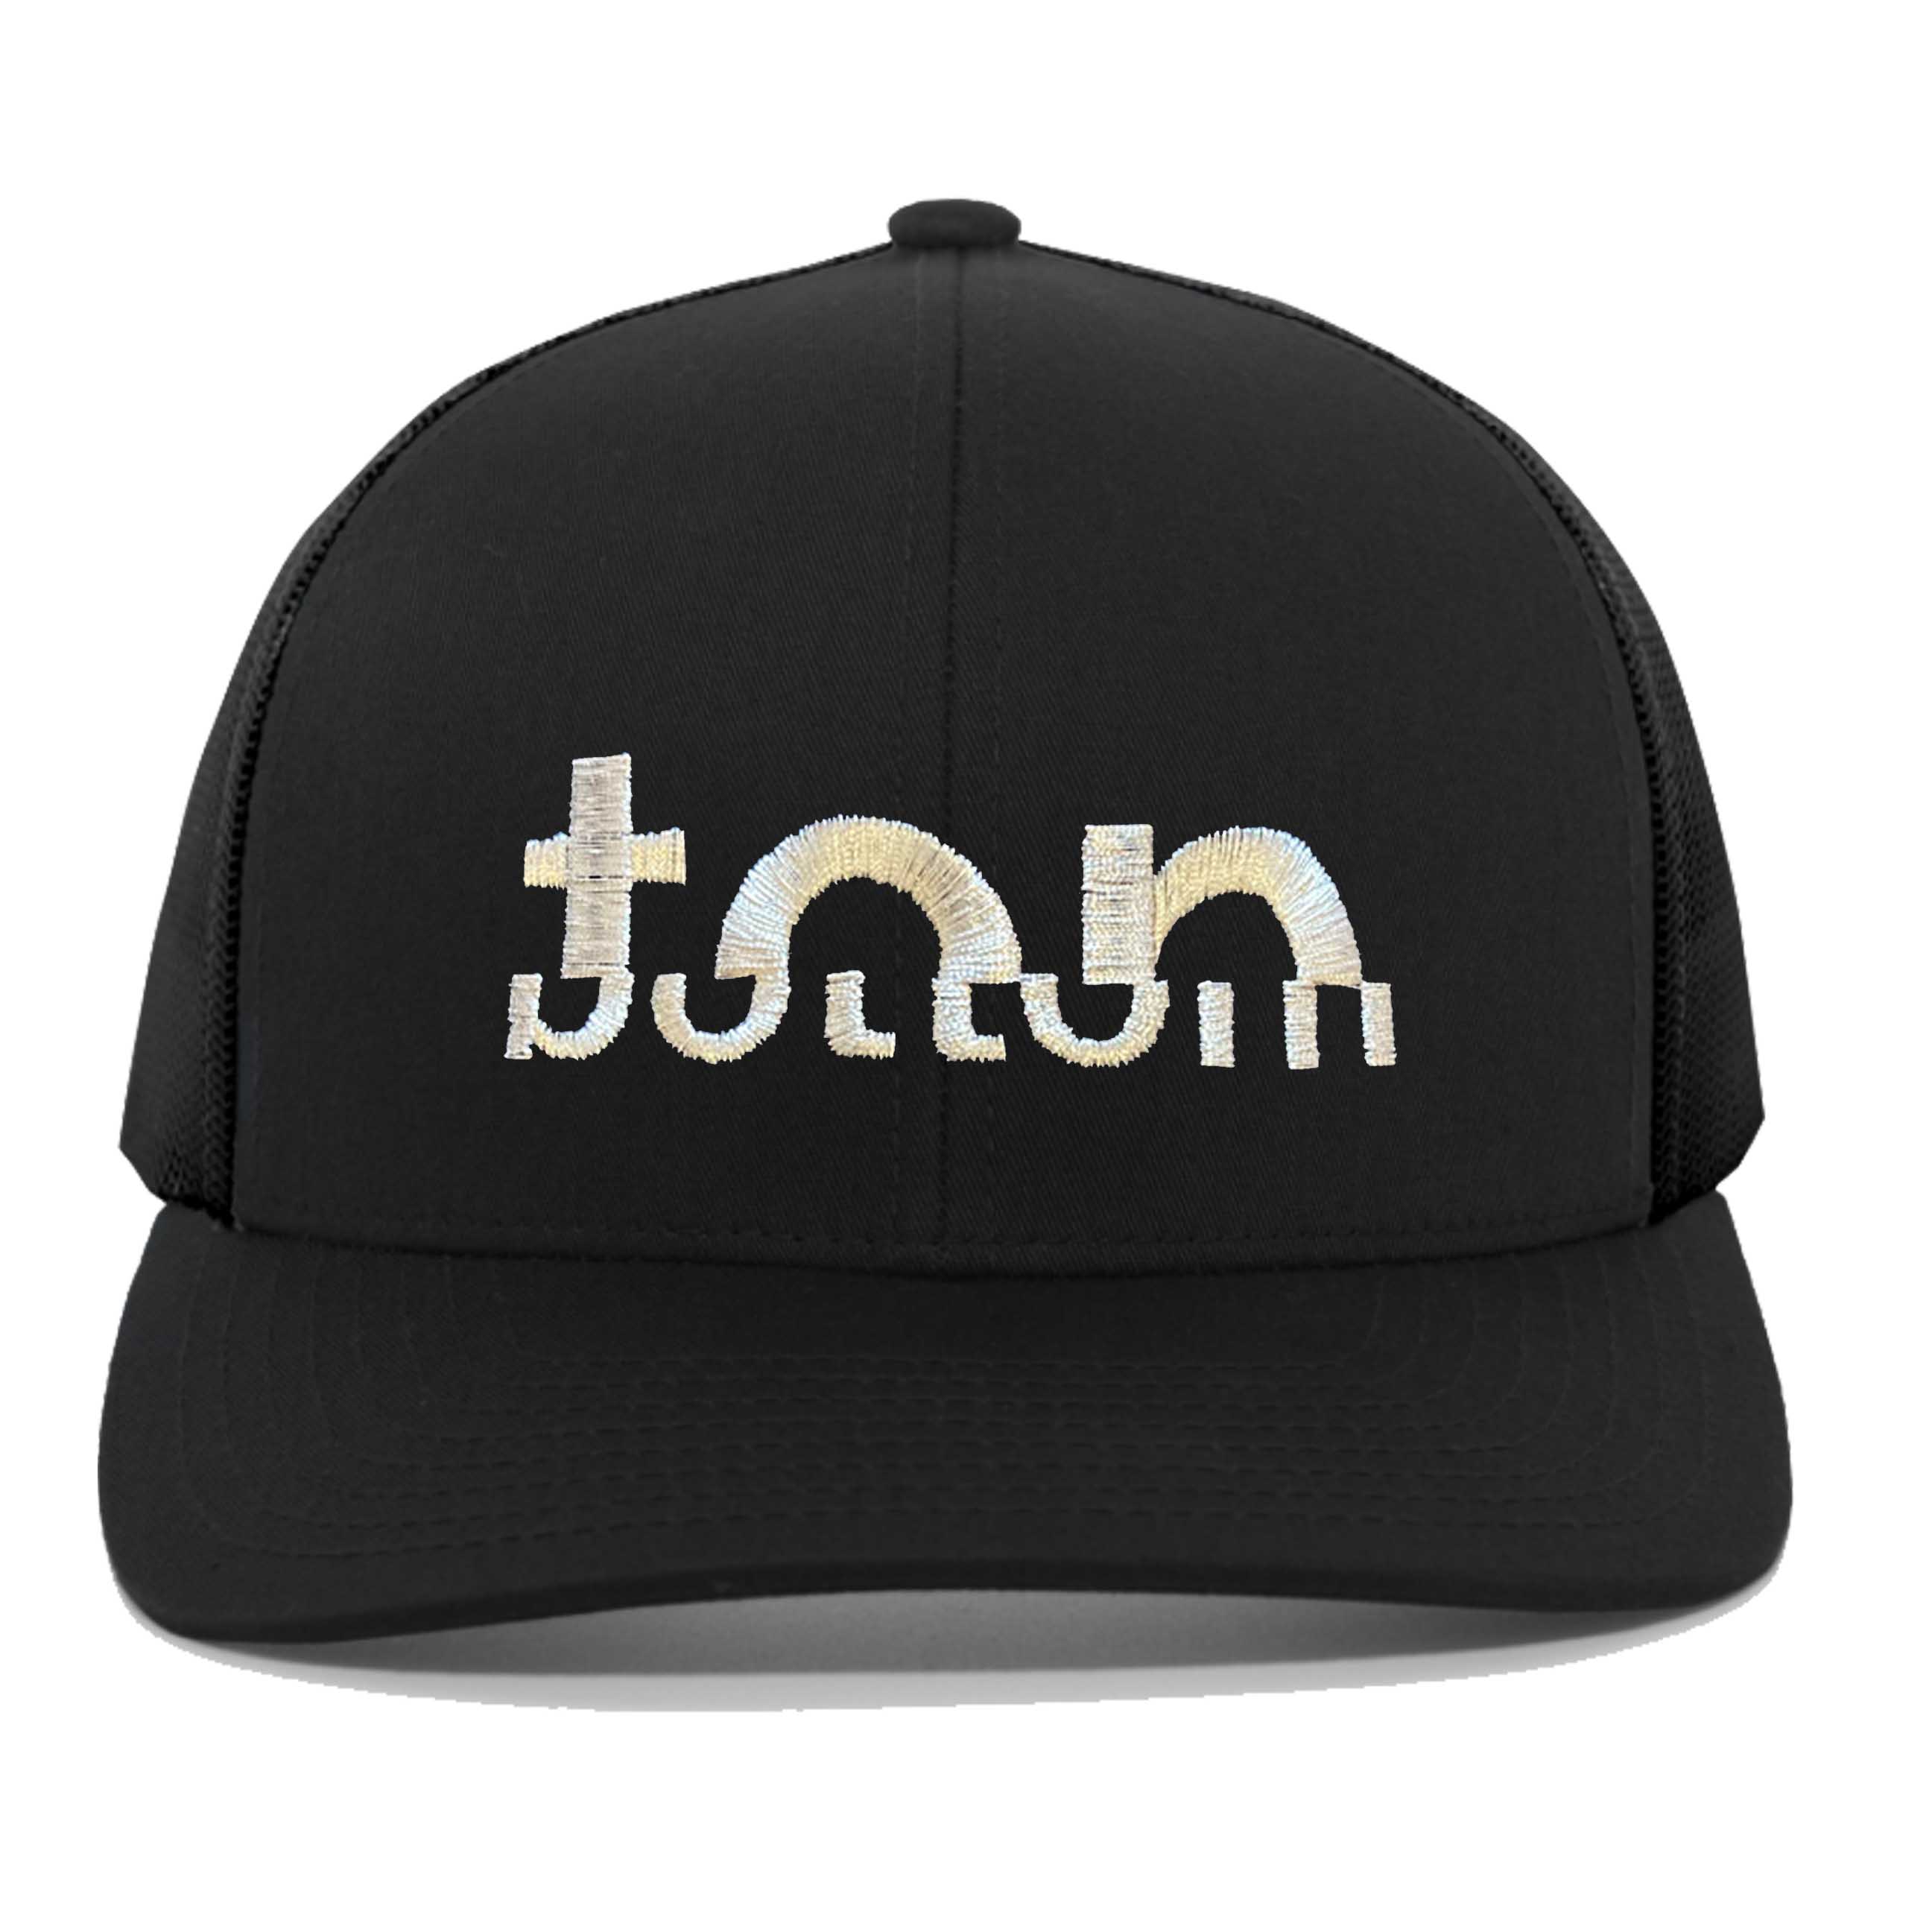 versatile snapback hat black